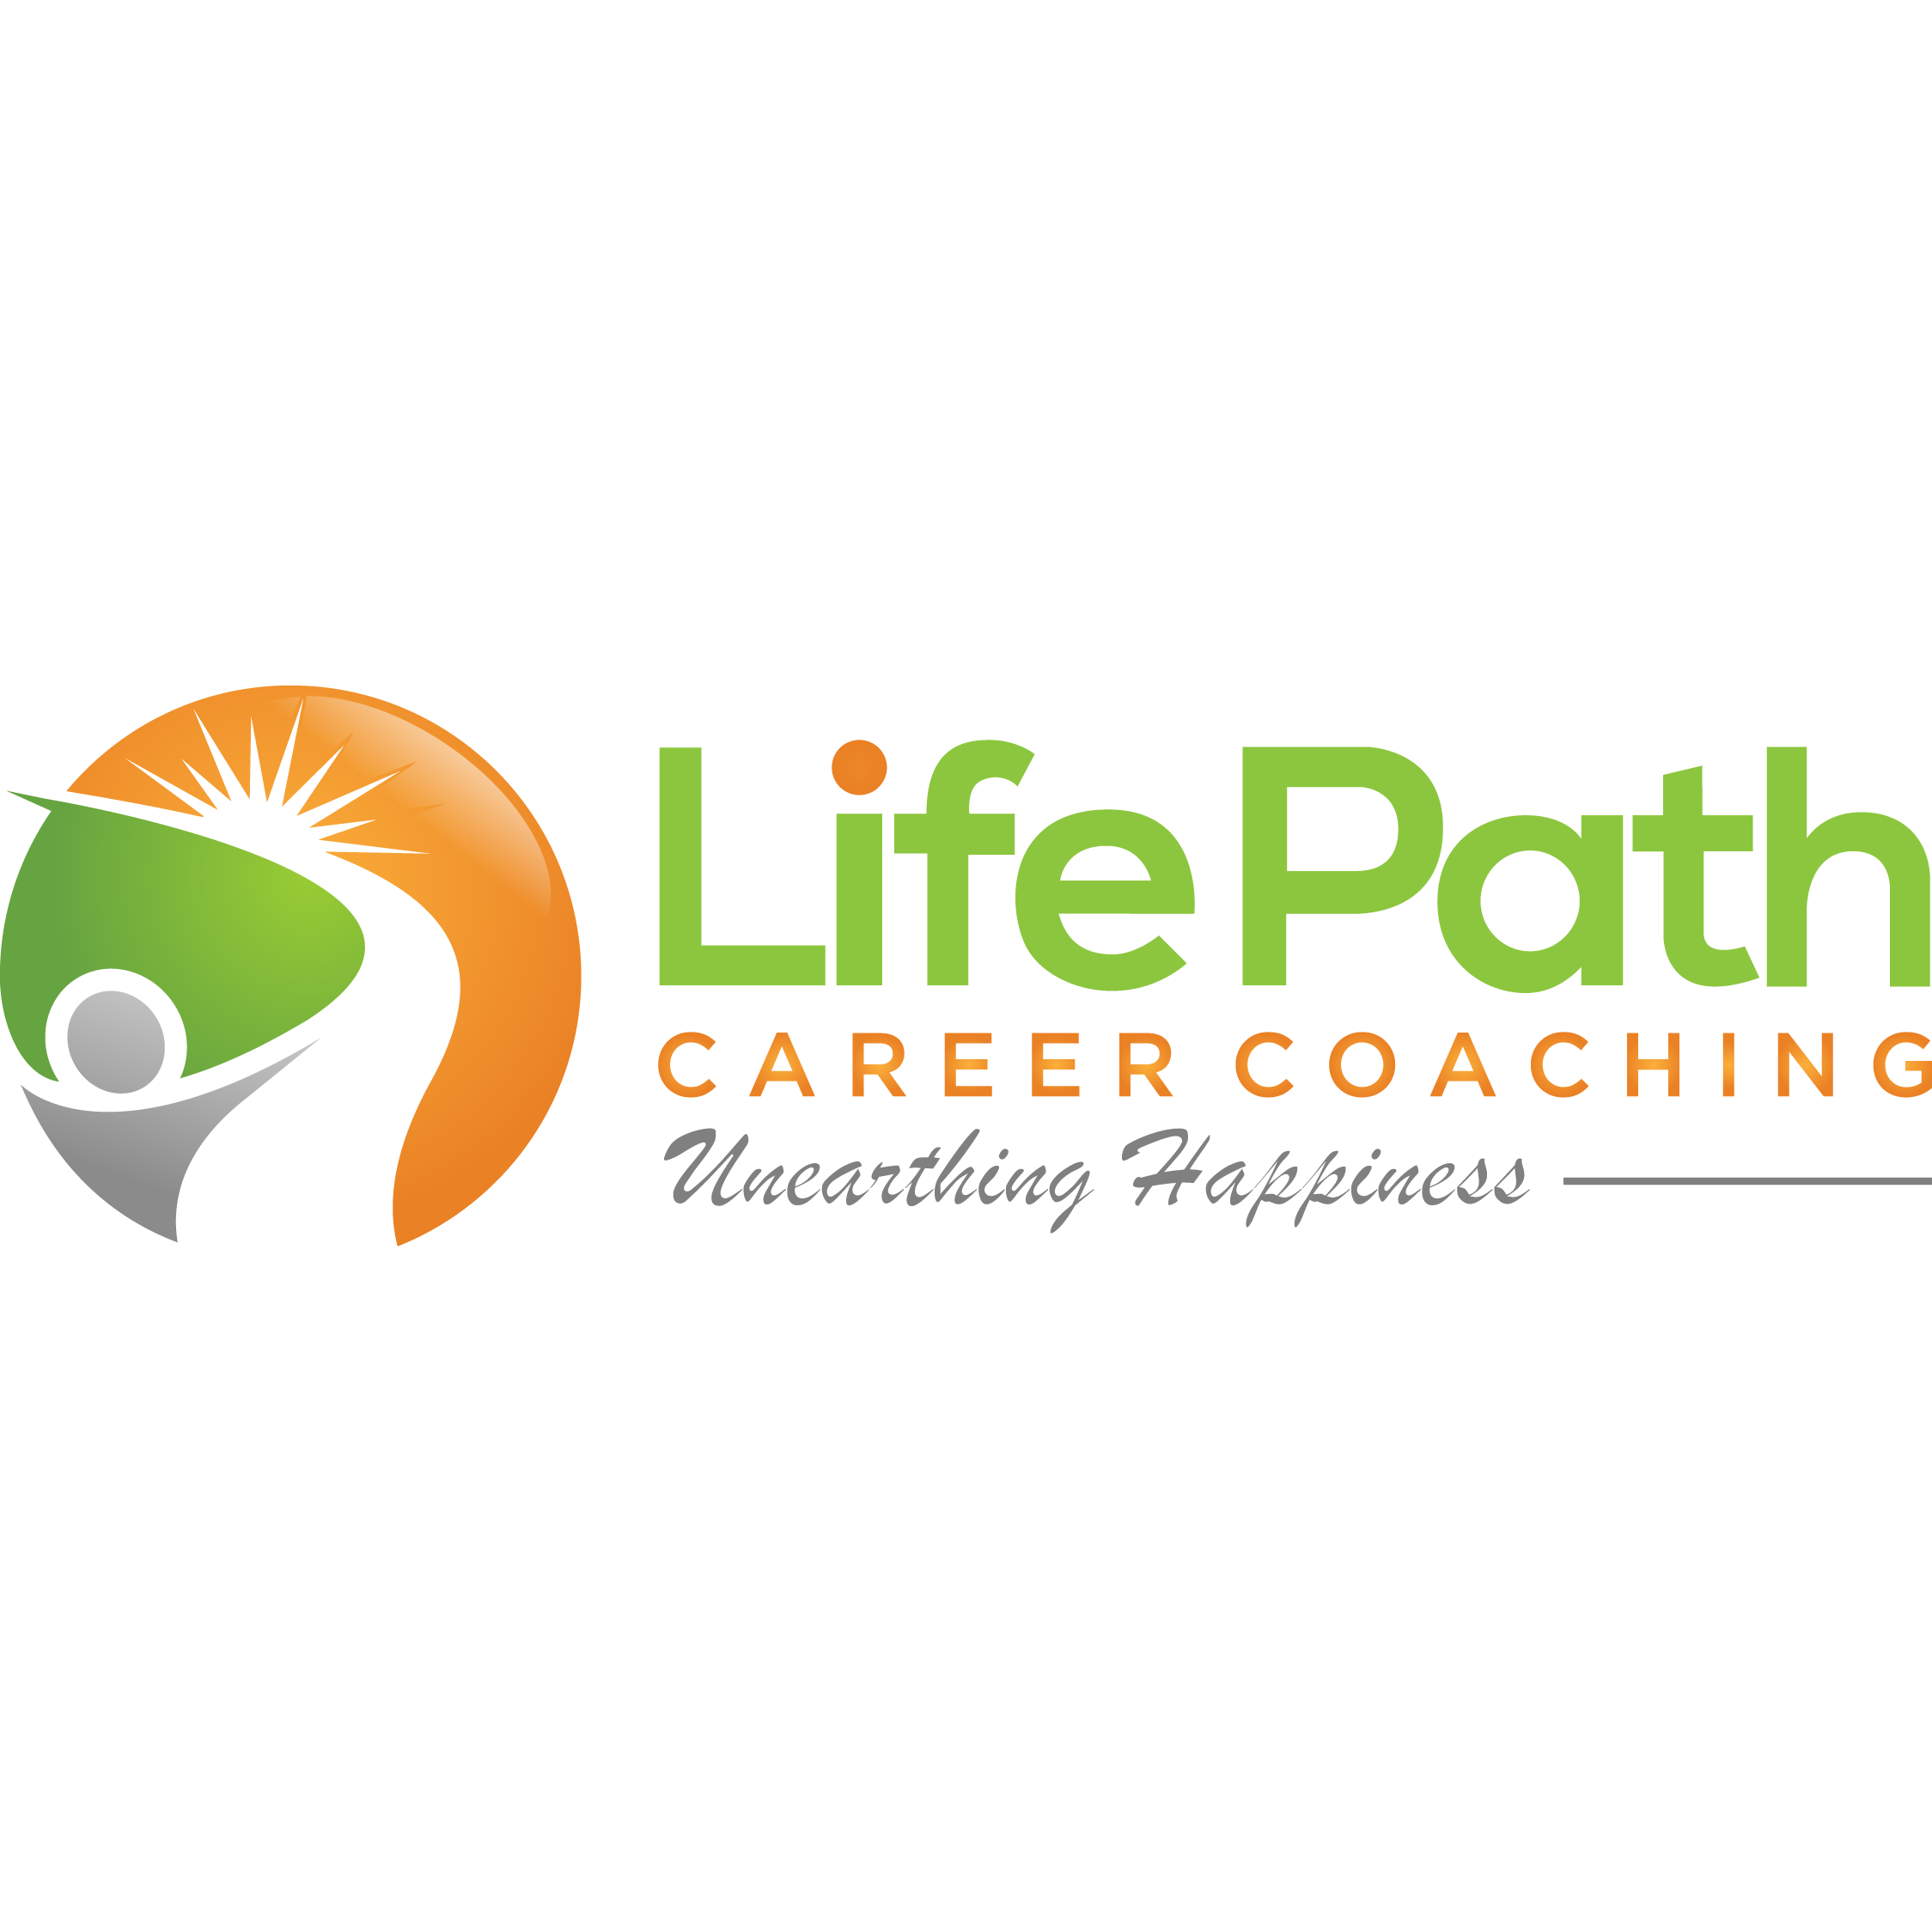 Life Path Career Coaching - Coorparoo, QLD 4151 - 0417 726 861 | ShowMeLocal.com